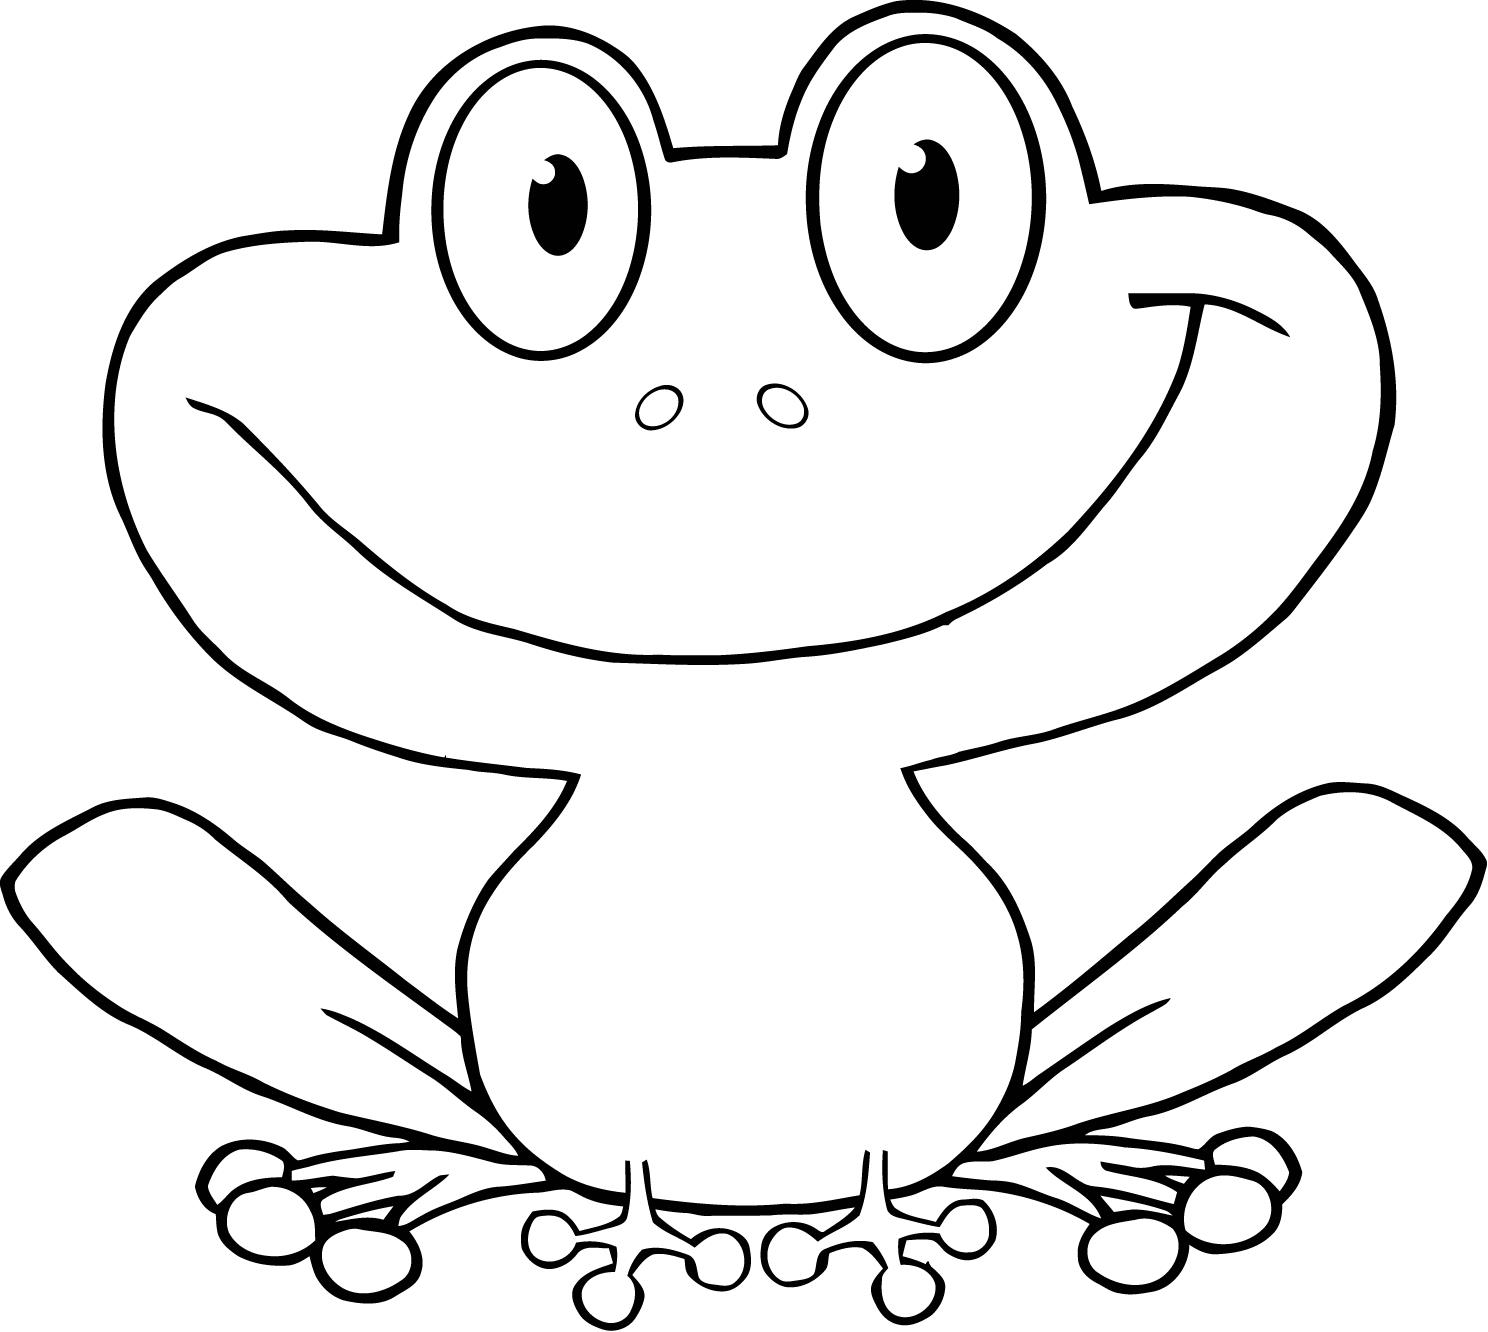 Pin Cartoon Frog Tattoos Page 2 on Pinterest